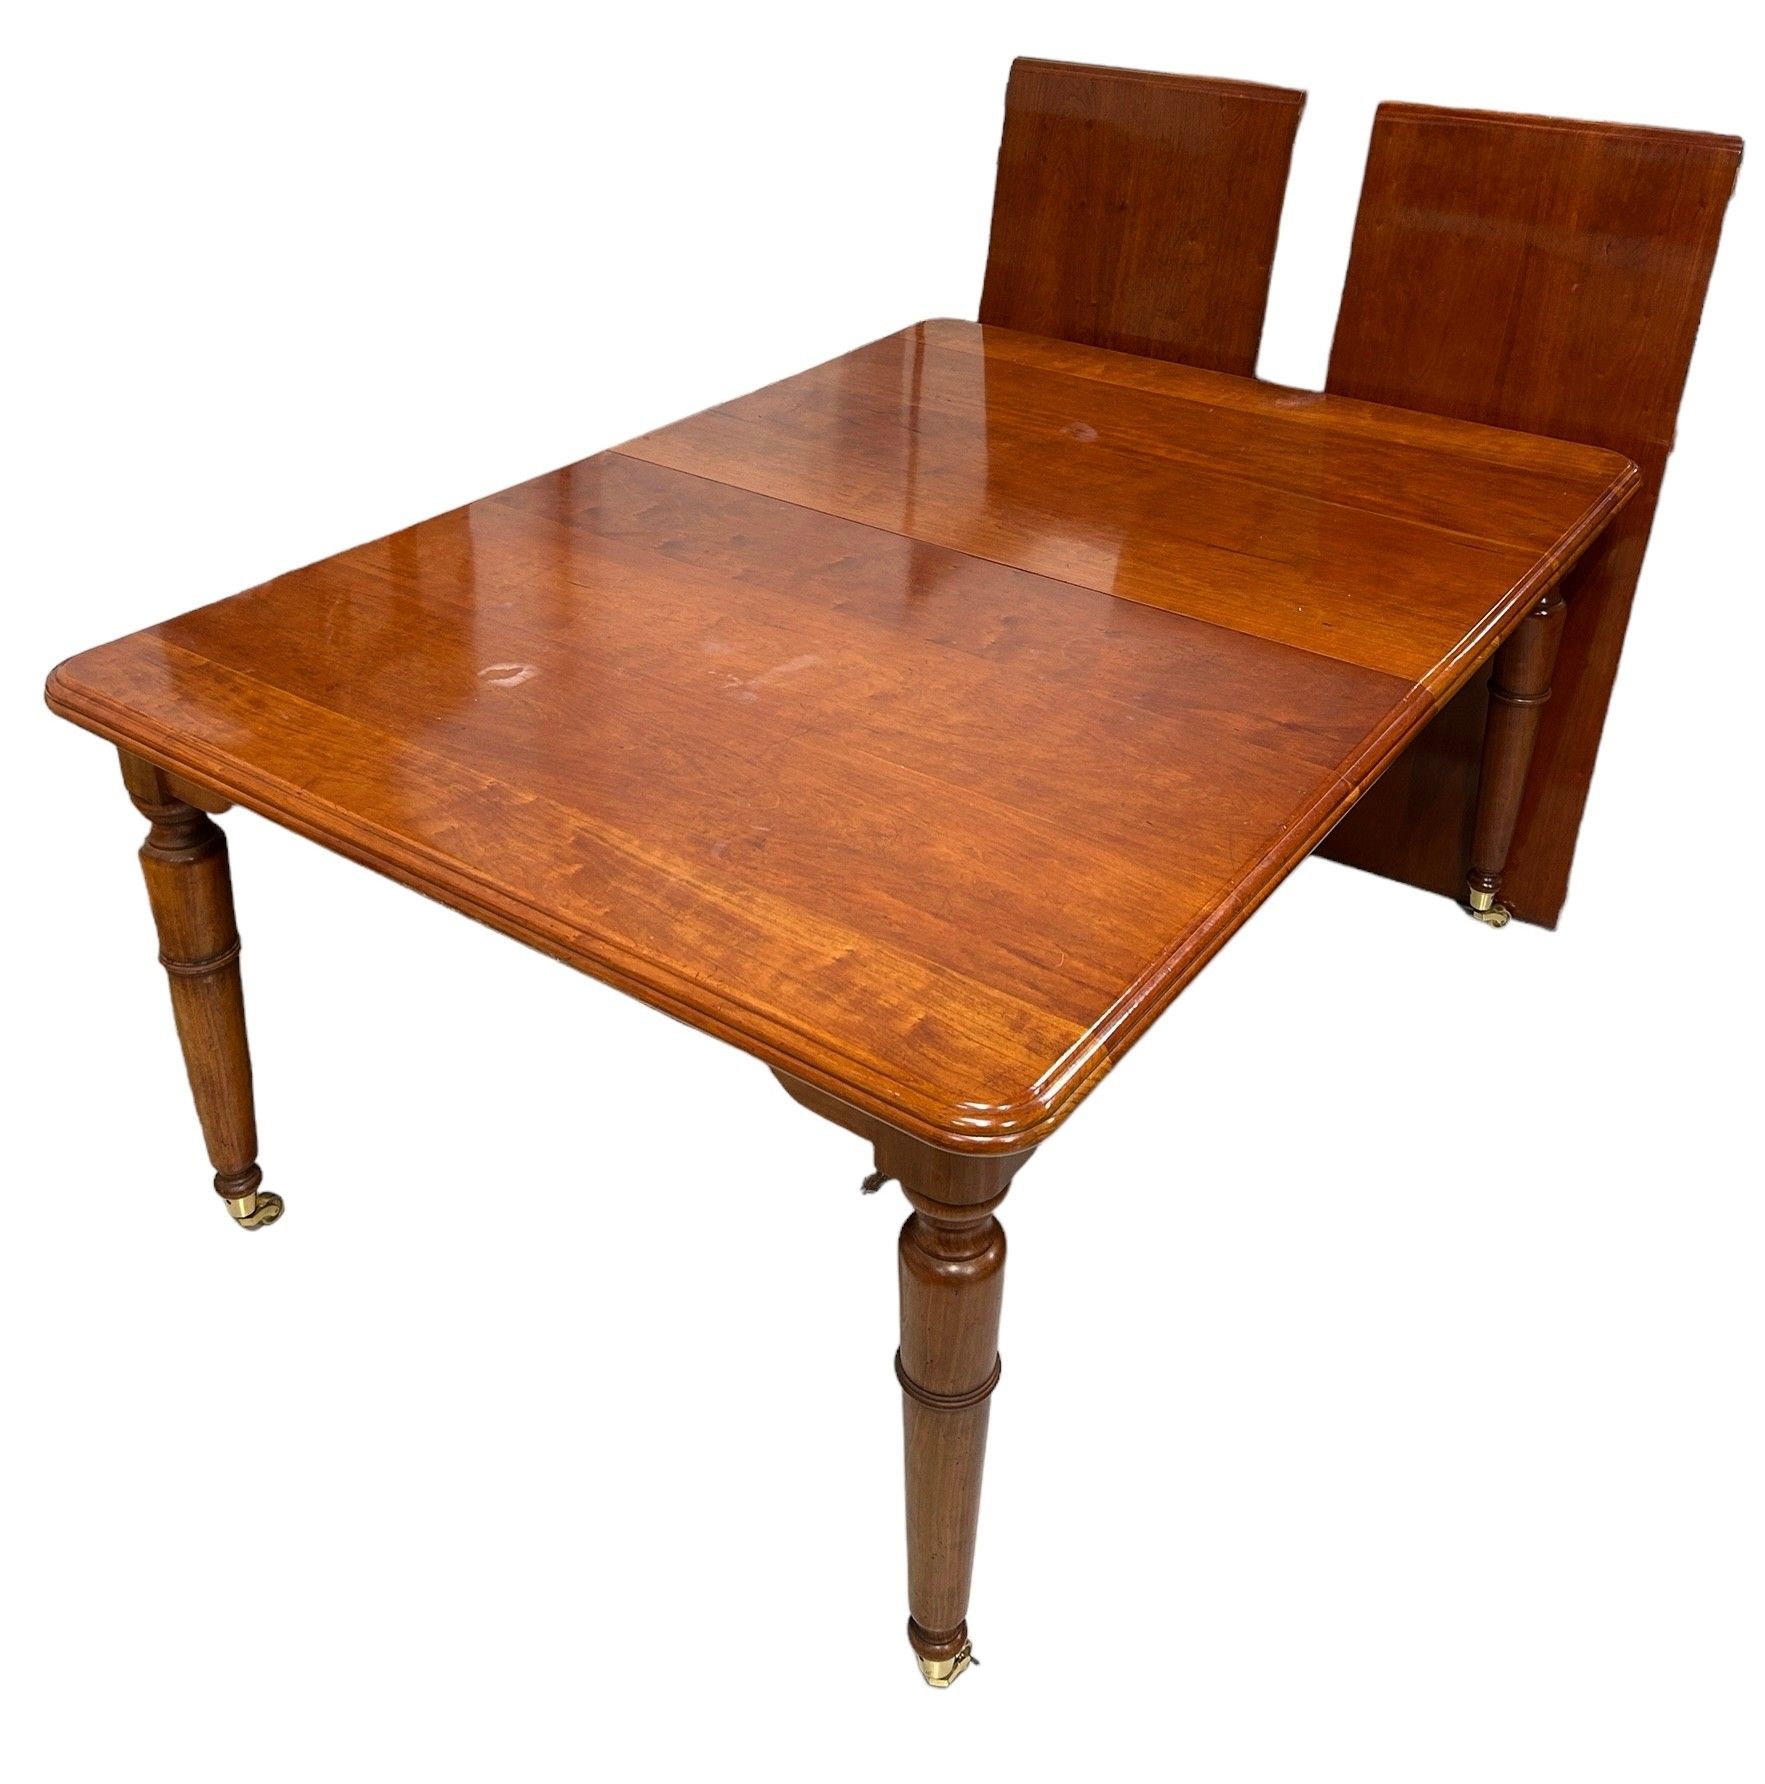 Null 一张查理斯-巴尔樱桃木餐桌和 12 把椅子、 

餐桌 163 厘米 x 116 厘米 x 76 厘米 
餐叶长 50 厘米 

雕刻椅 87 厘米 &hellip;